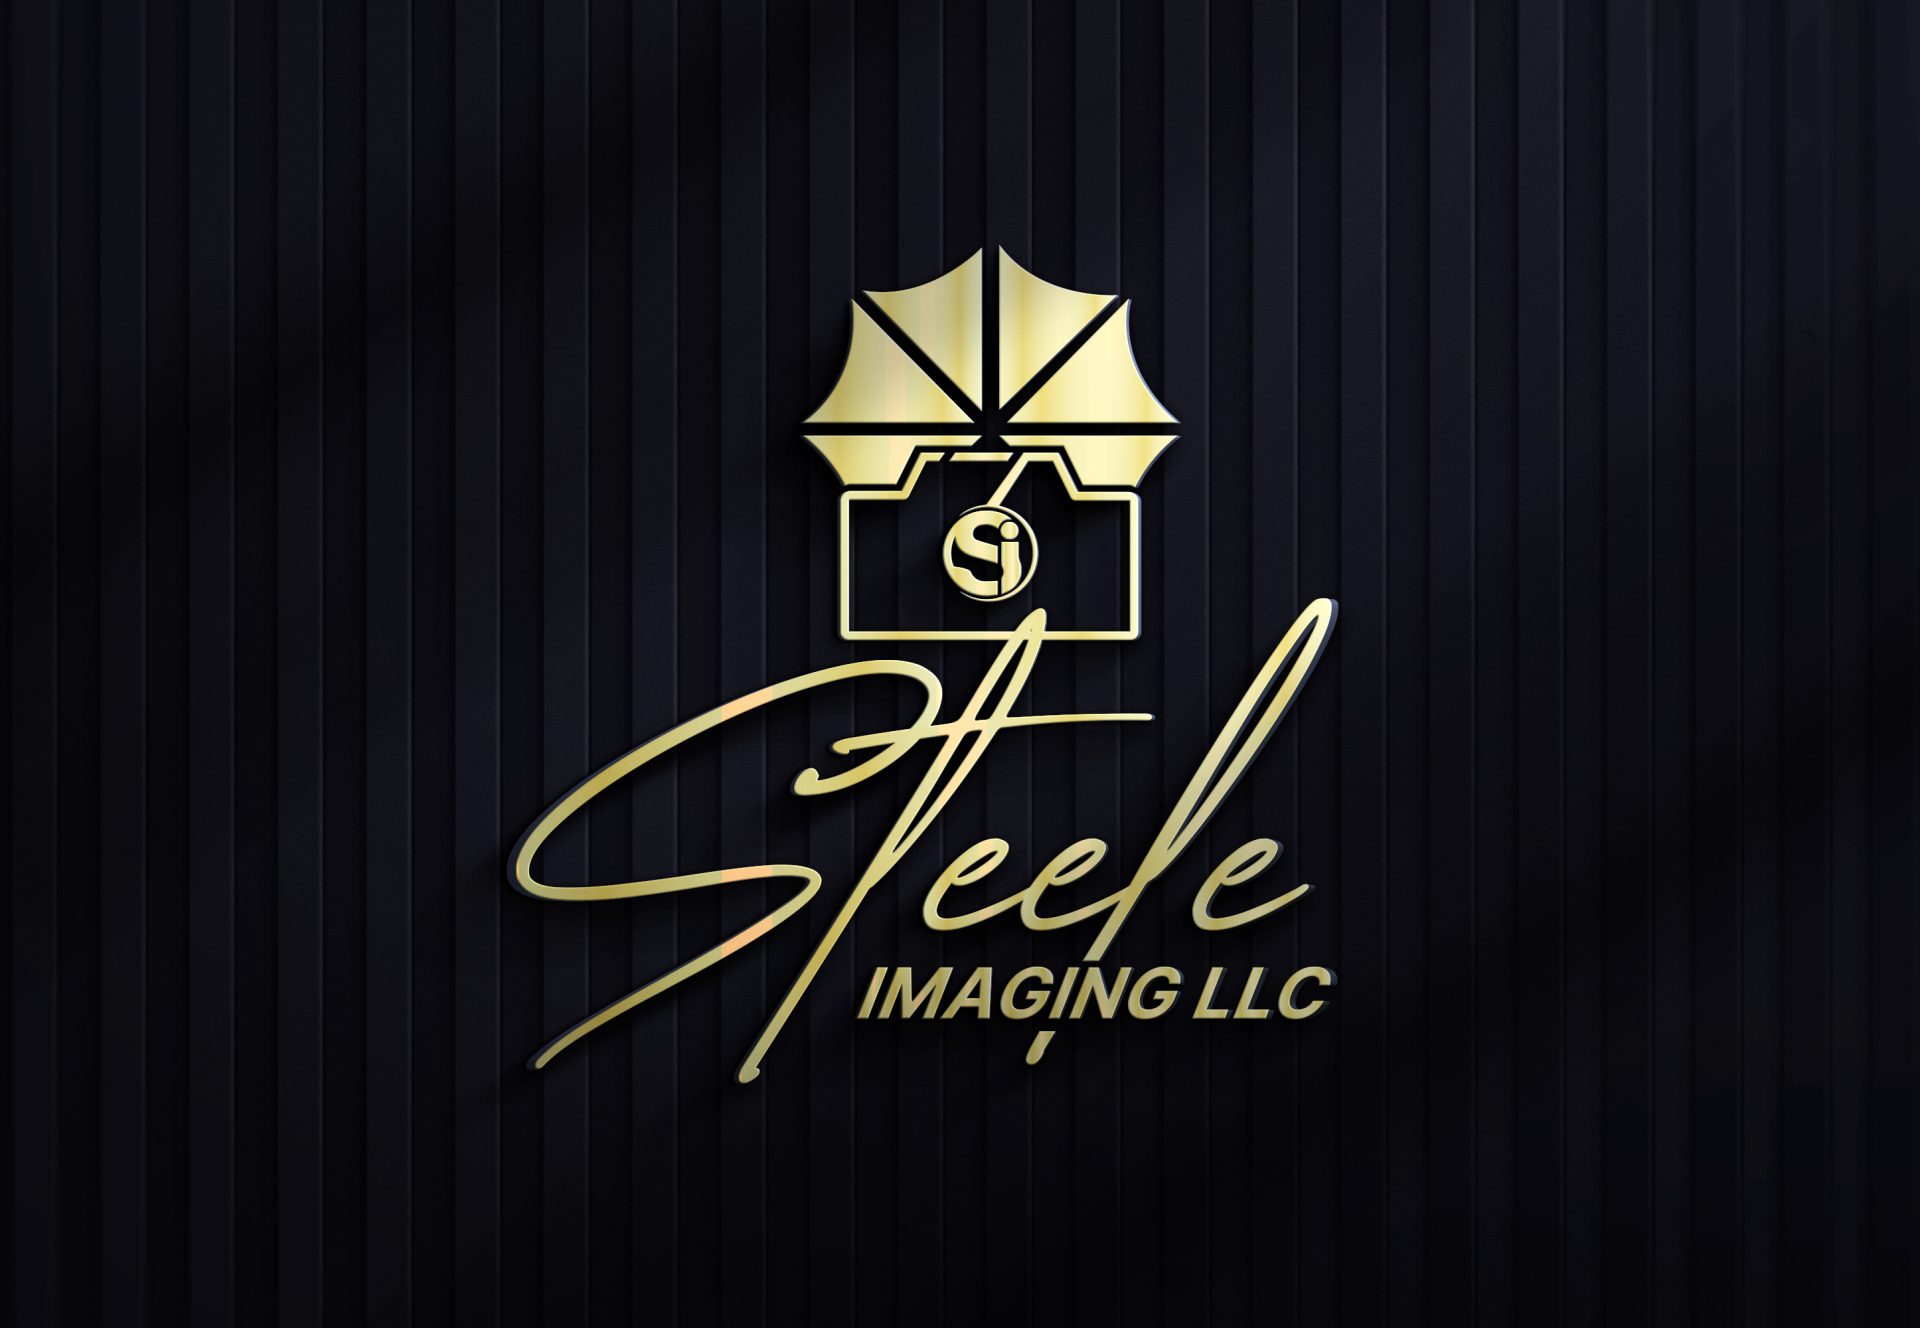 Steele Imaging Logo with black background